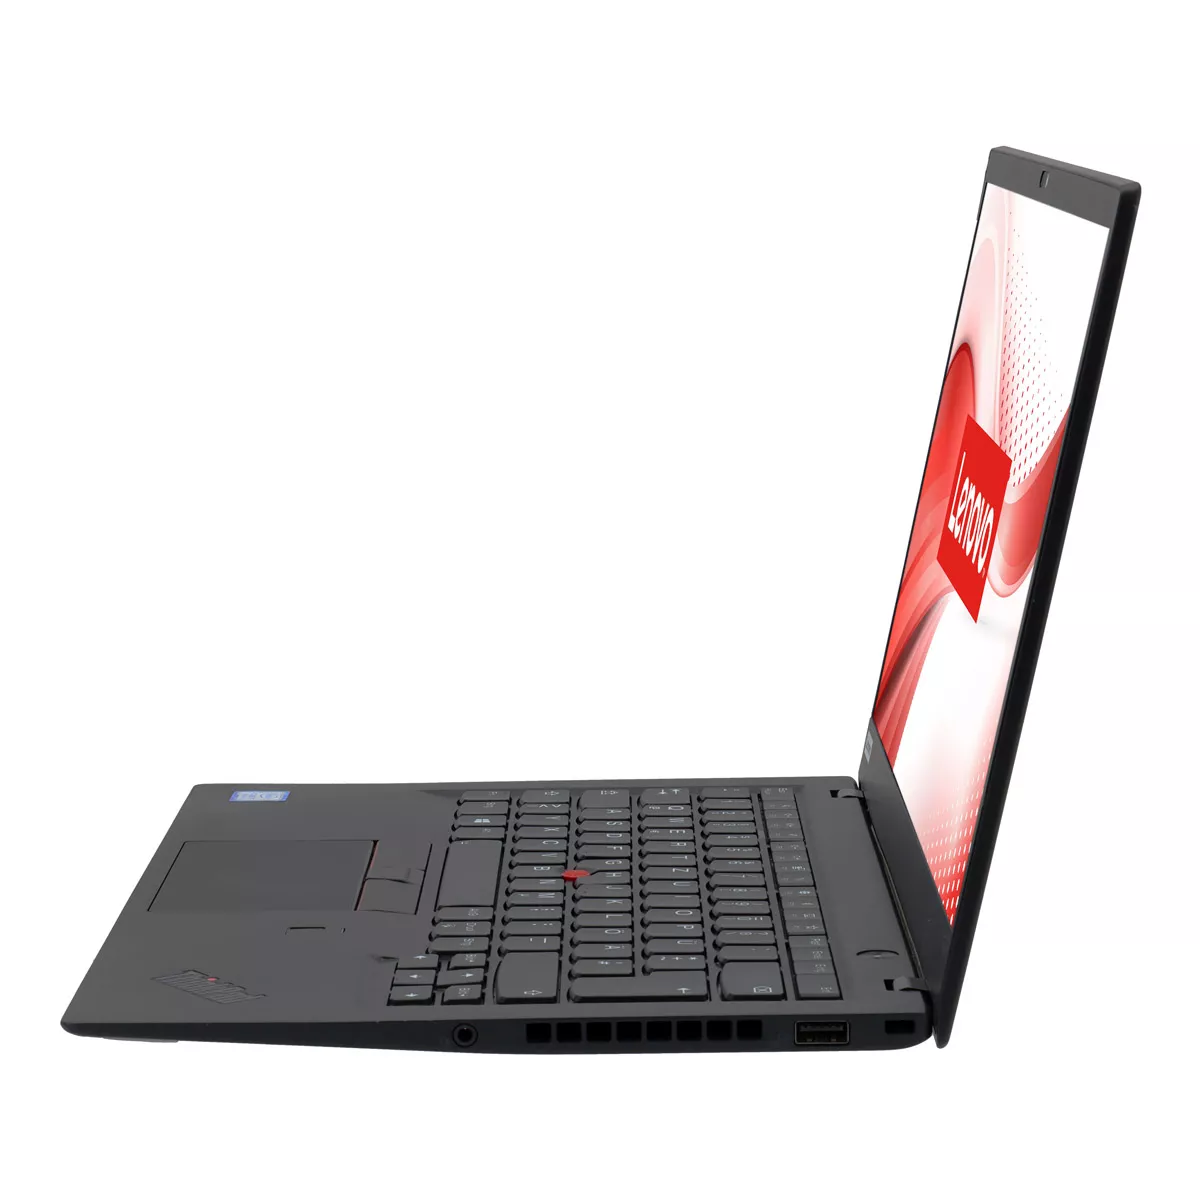 Lenovo ThinkPad X1 Carbon G7 Core i7 8565U Full-HD 16 GB 500 GB M.2 nVME SSD LTE Webcam A